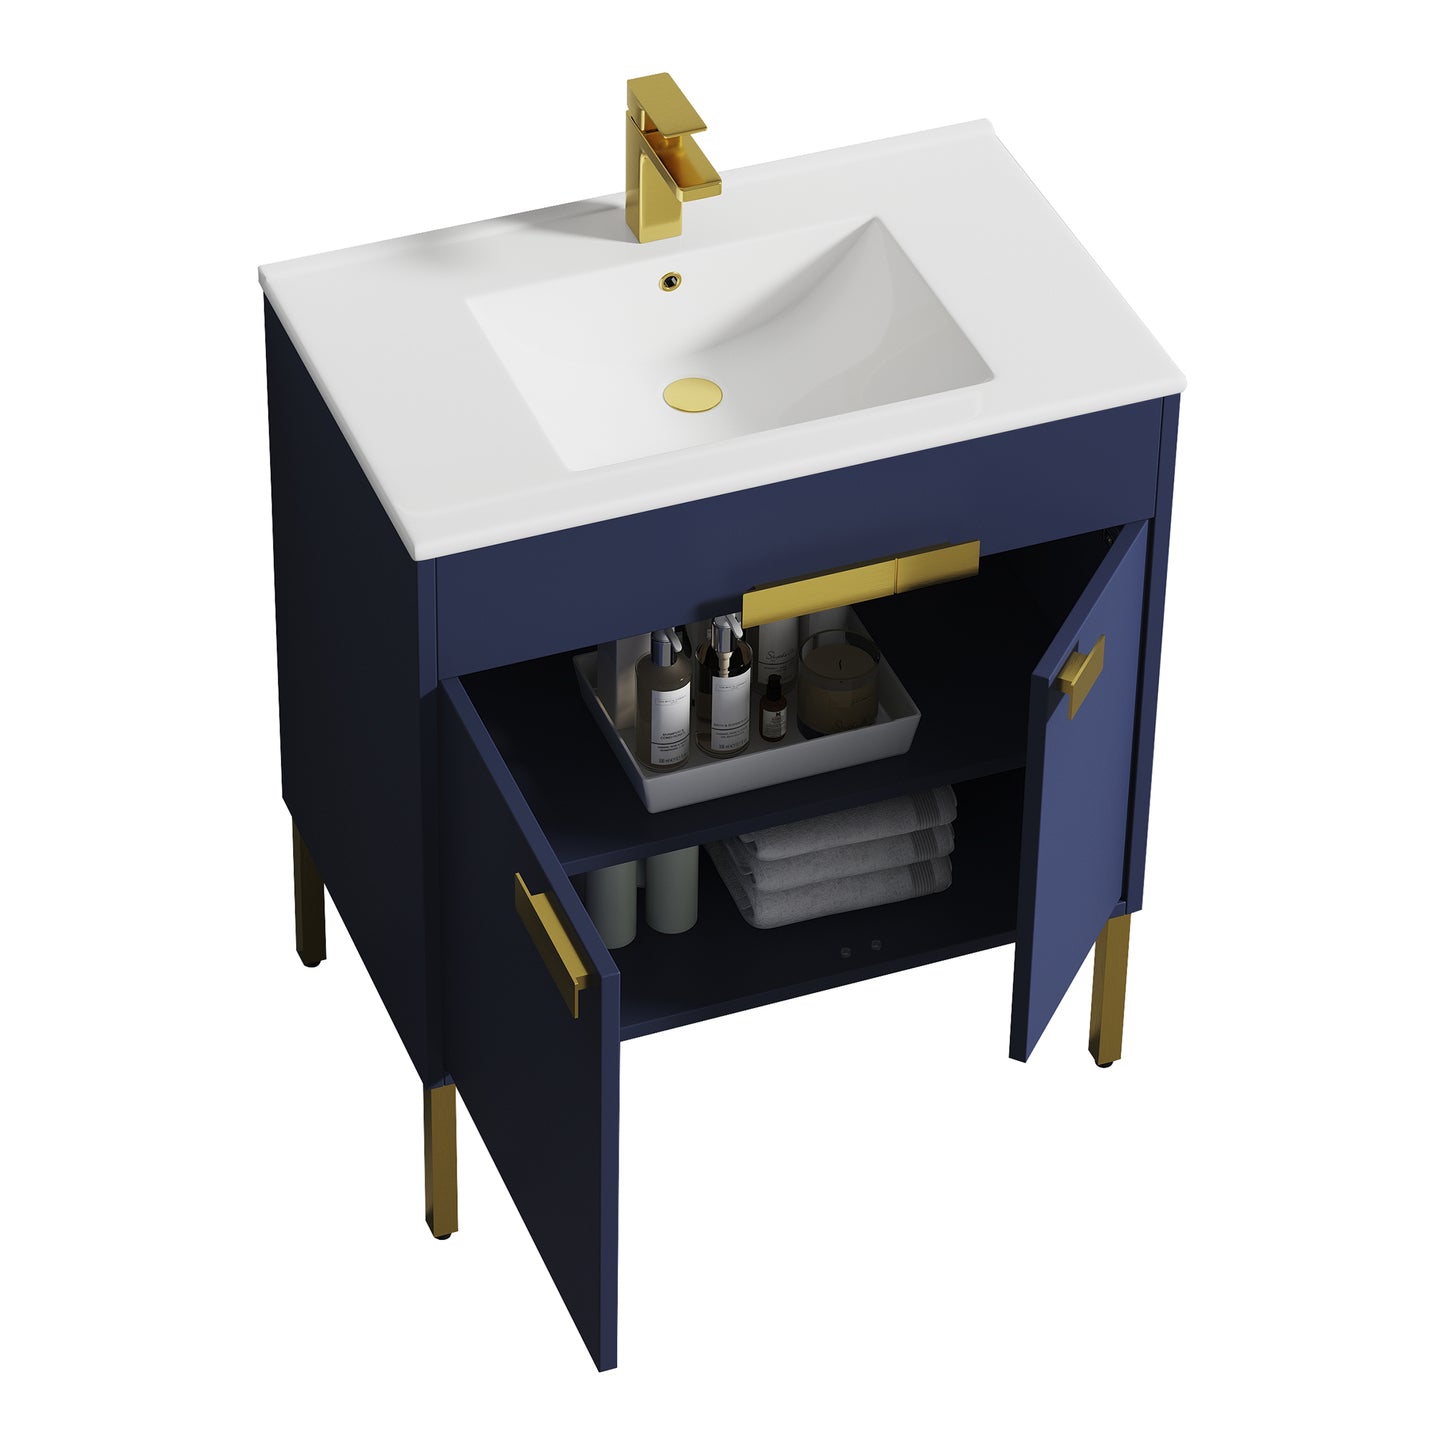 Bari 30" Freestanding Bathroom Vanity with Sink - Navy Blue